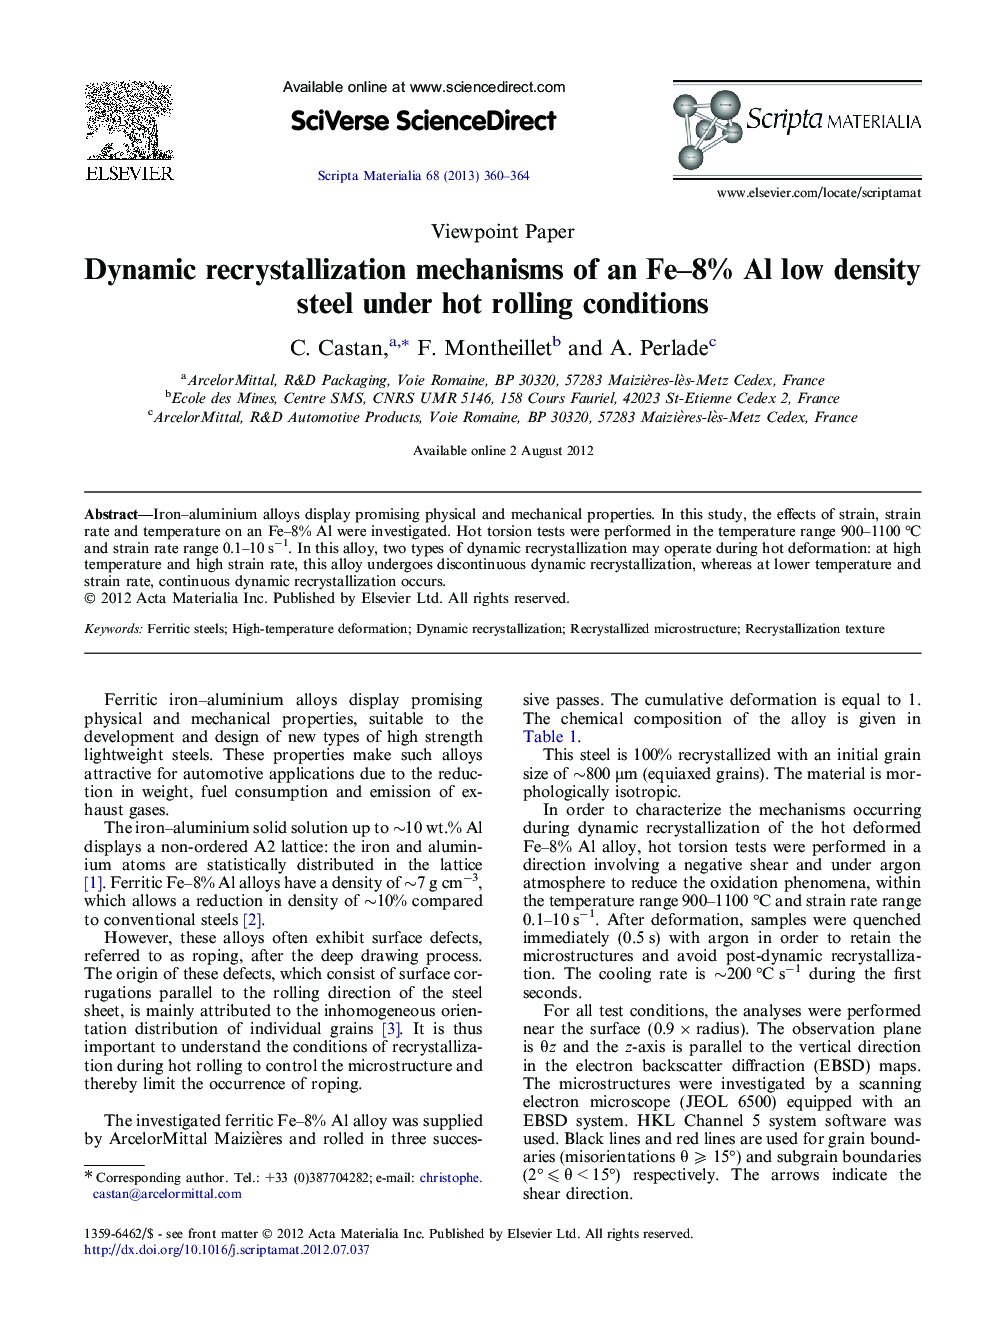 Dynamic recrystallization mechanisms of an Fe–8% Al low density steel under hot rolling conditions